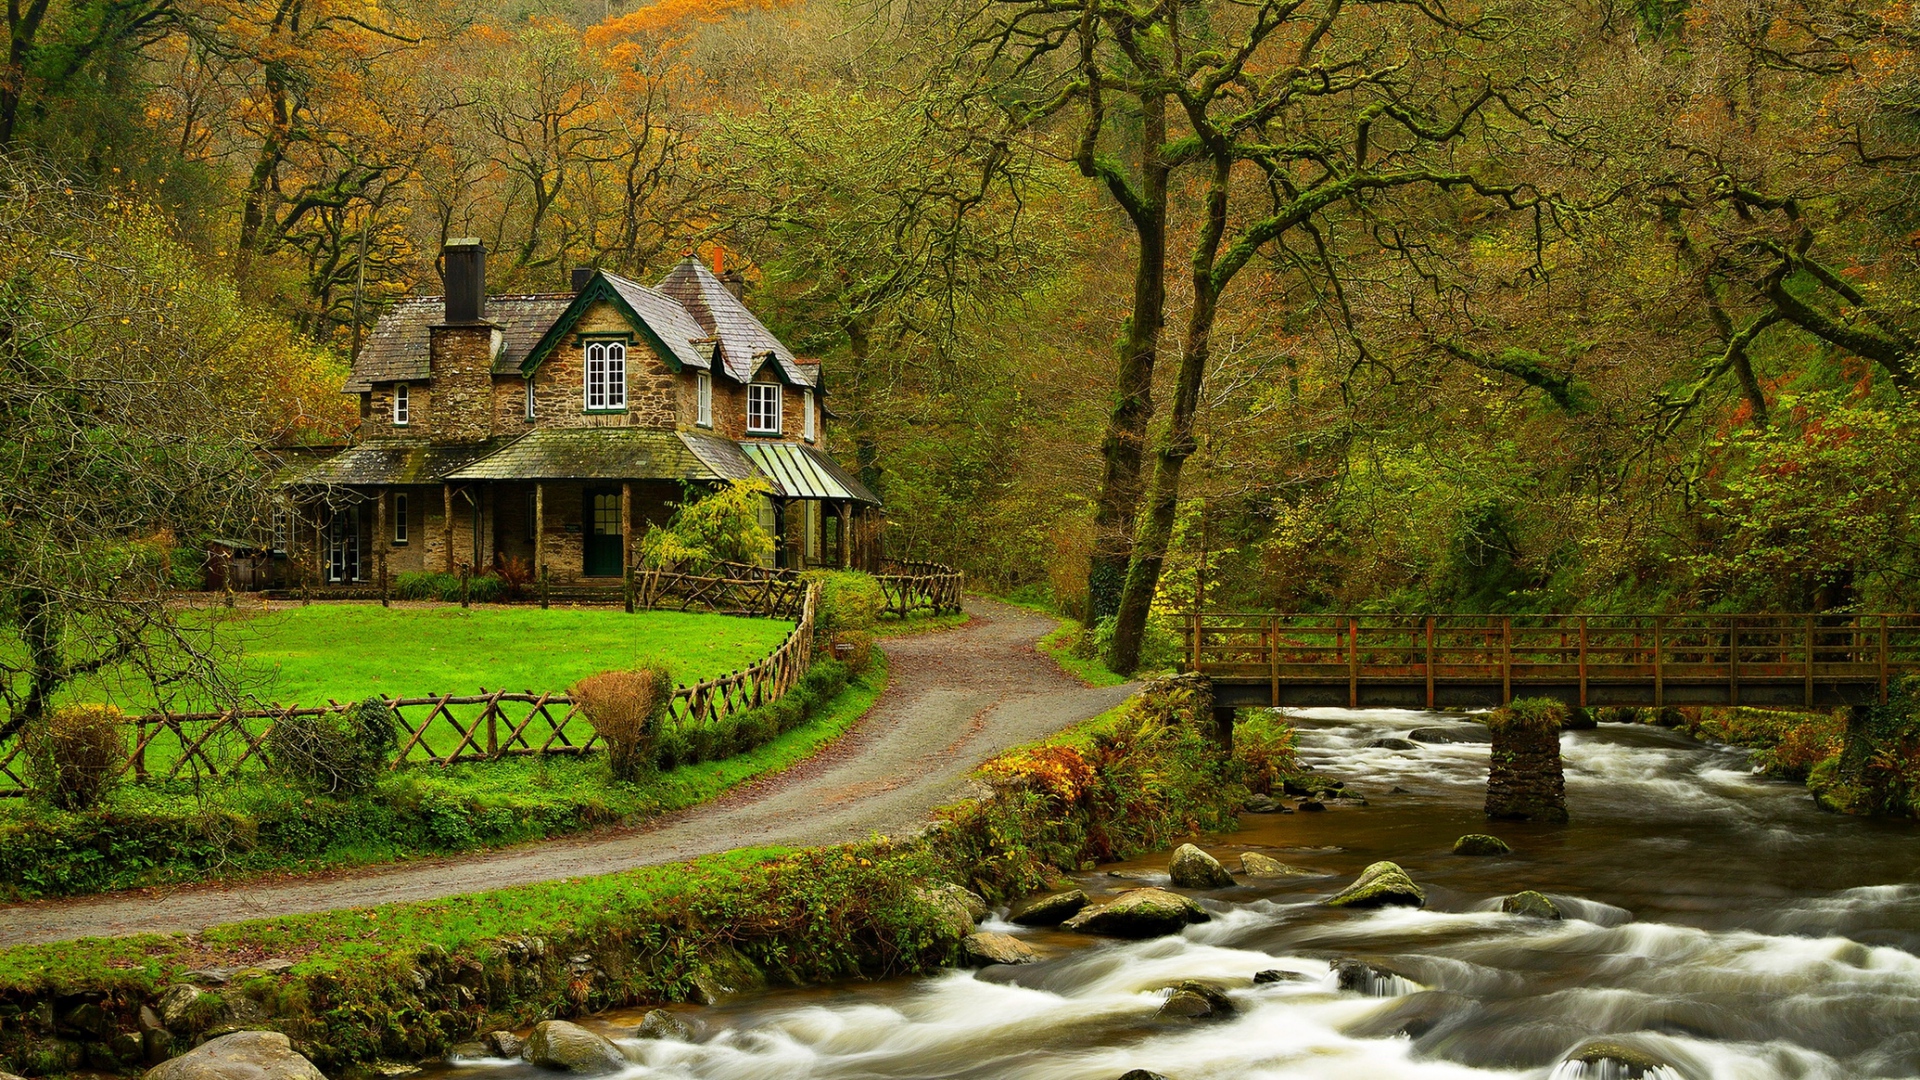 Download 1920x1080 HD Wallpaper autumn river house forest, Desktop